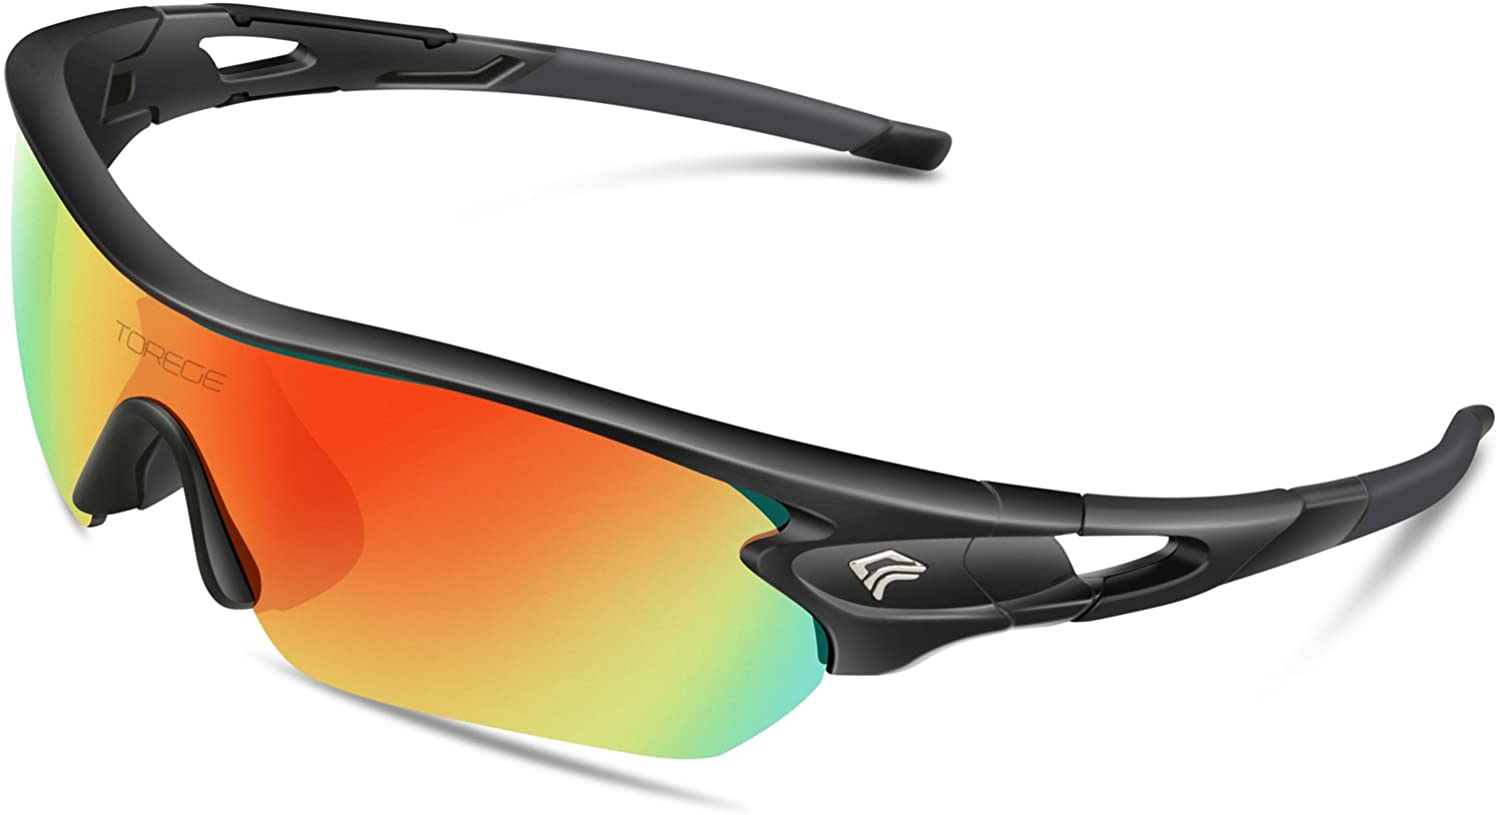 TOREGE Polarized Sports Sunglasses for Men Women Cycling Running Driving  Fishing